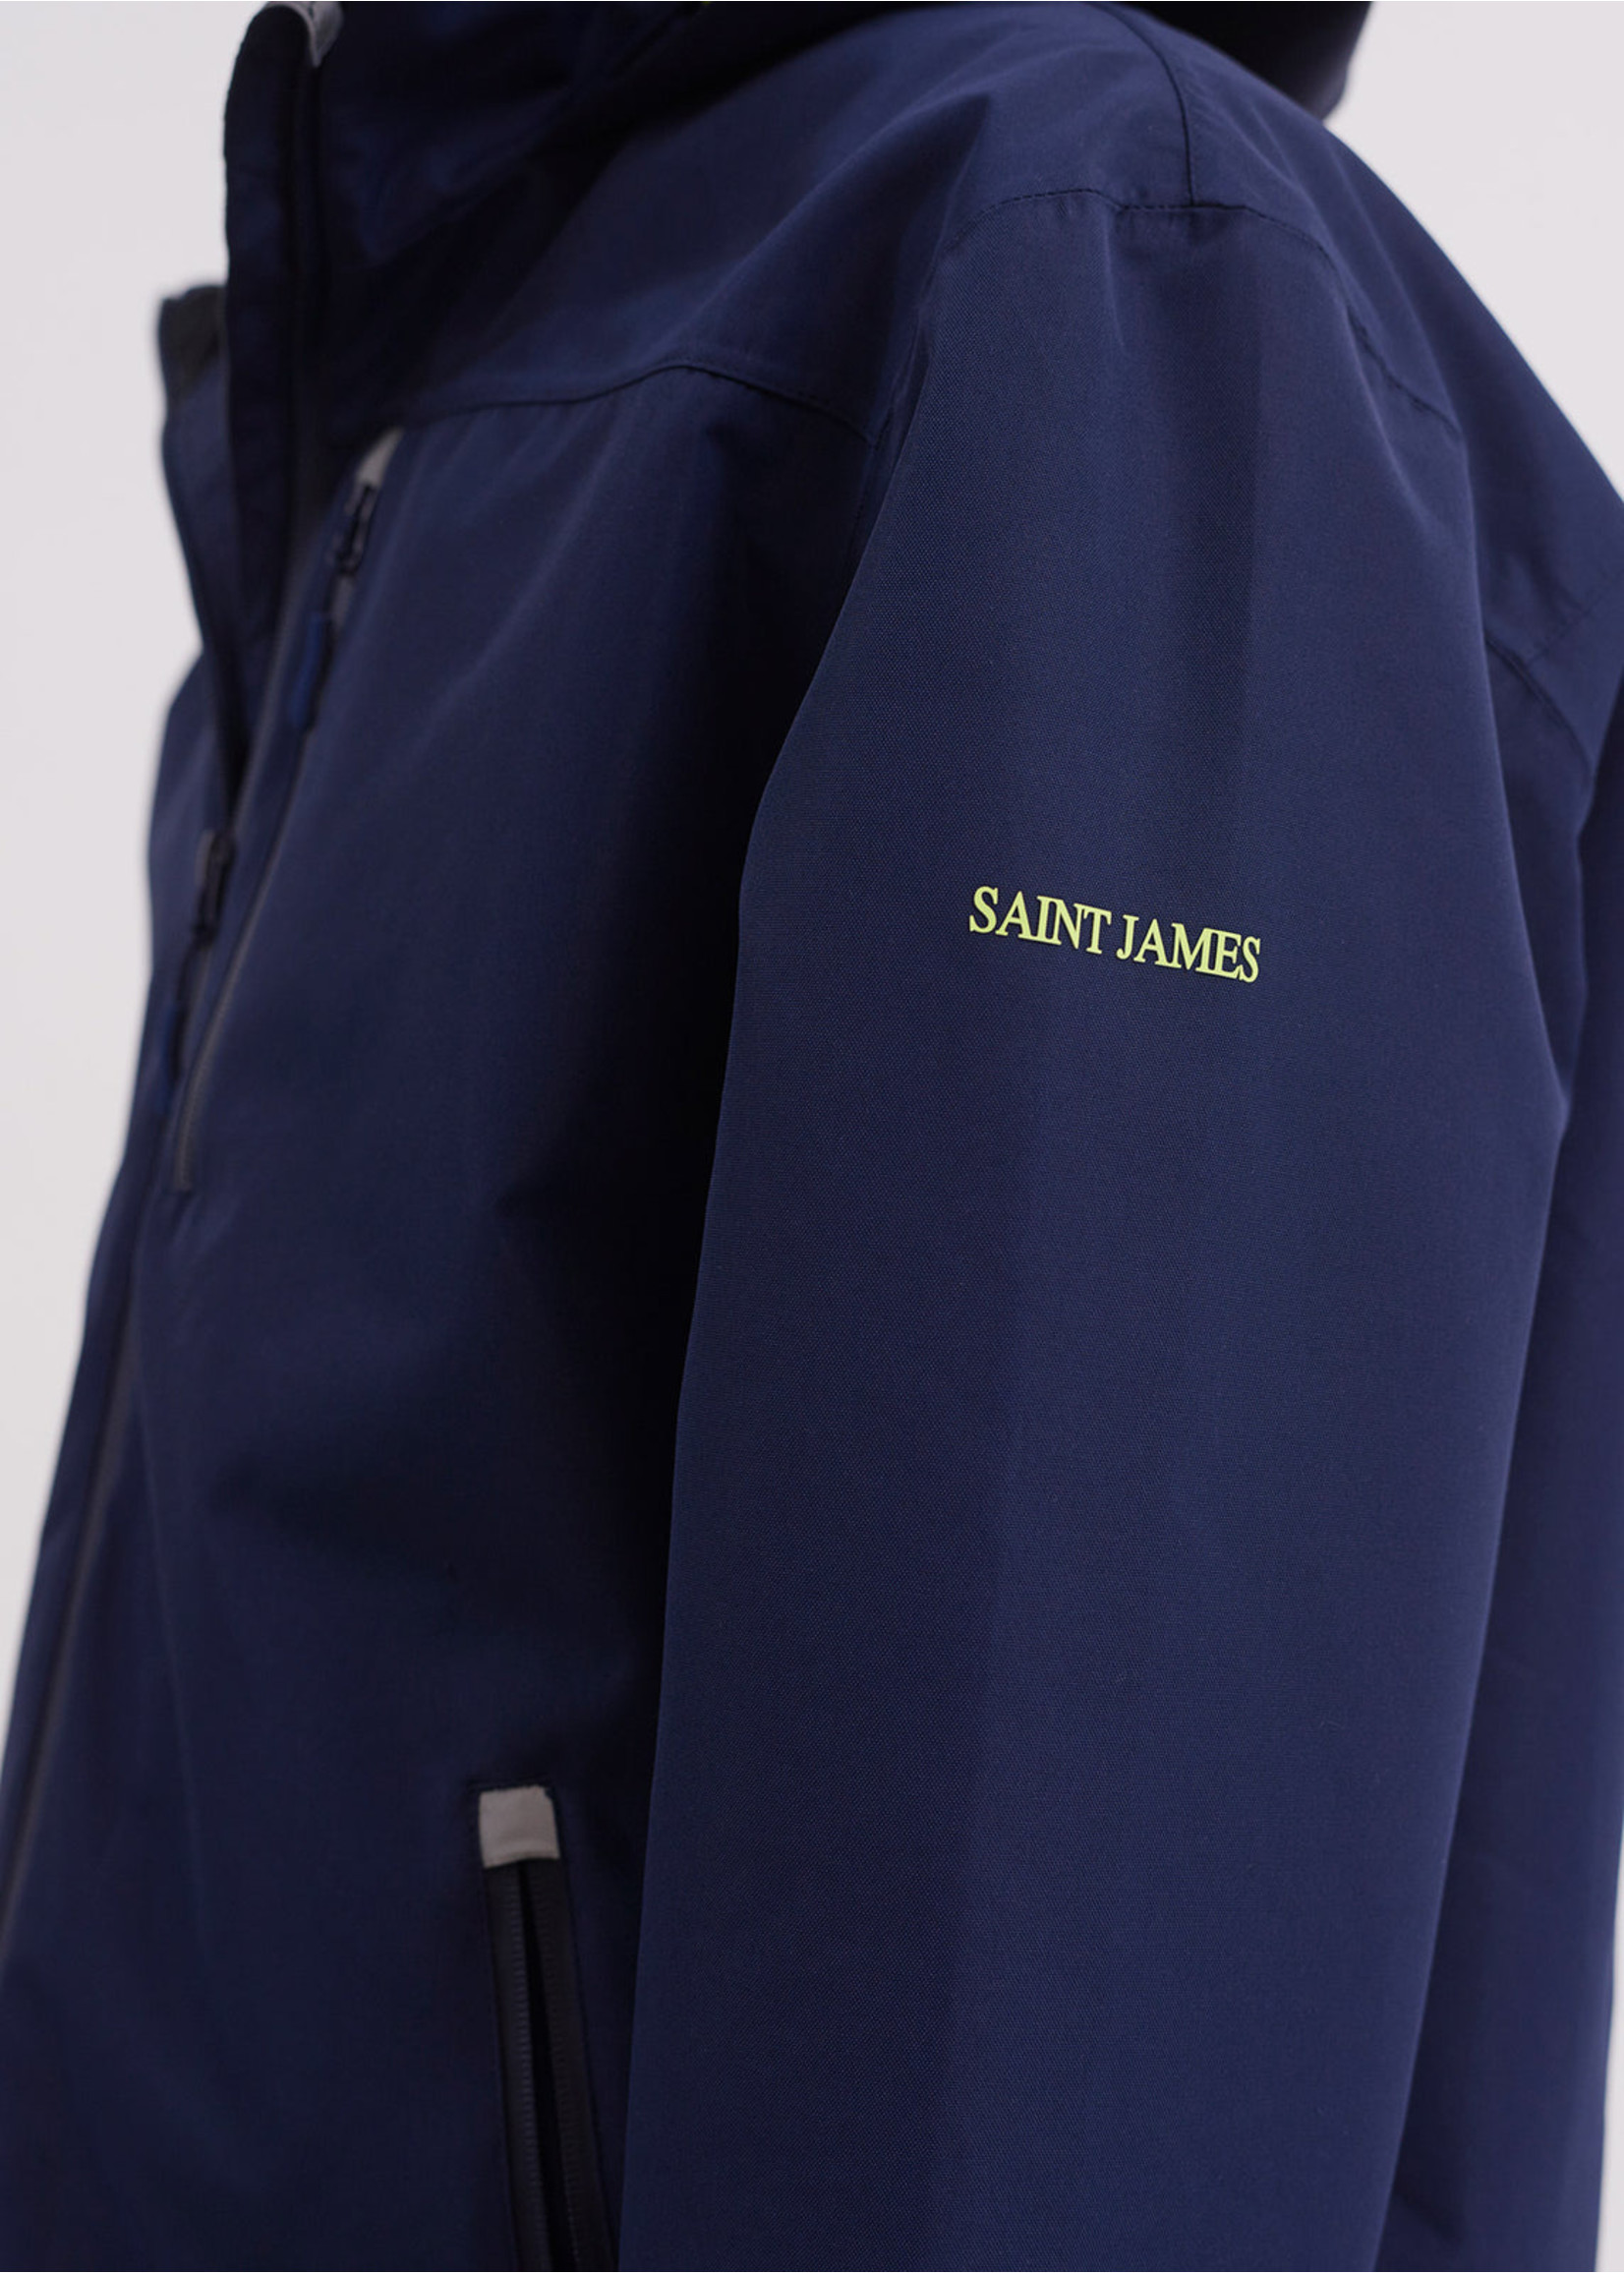 SAINT-JAMES St Joe technical jacket in canvas